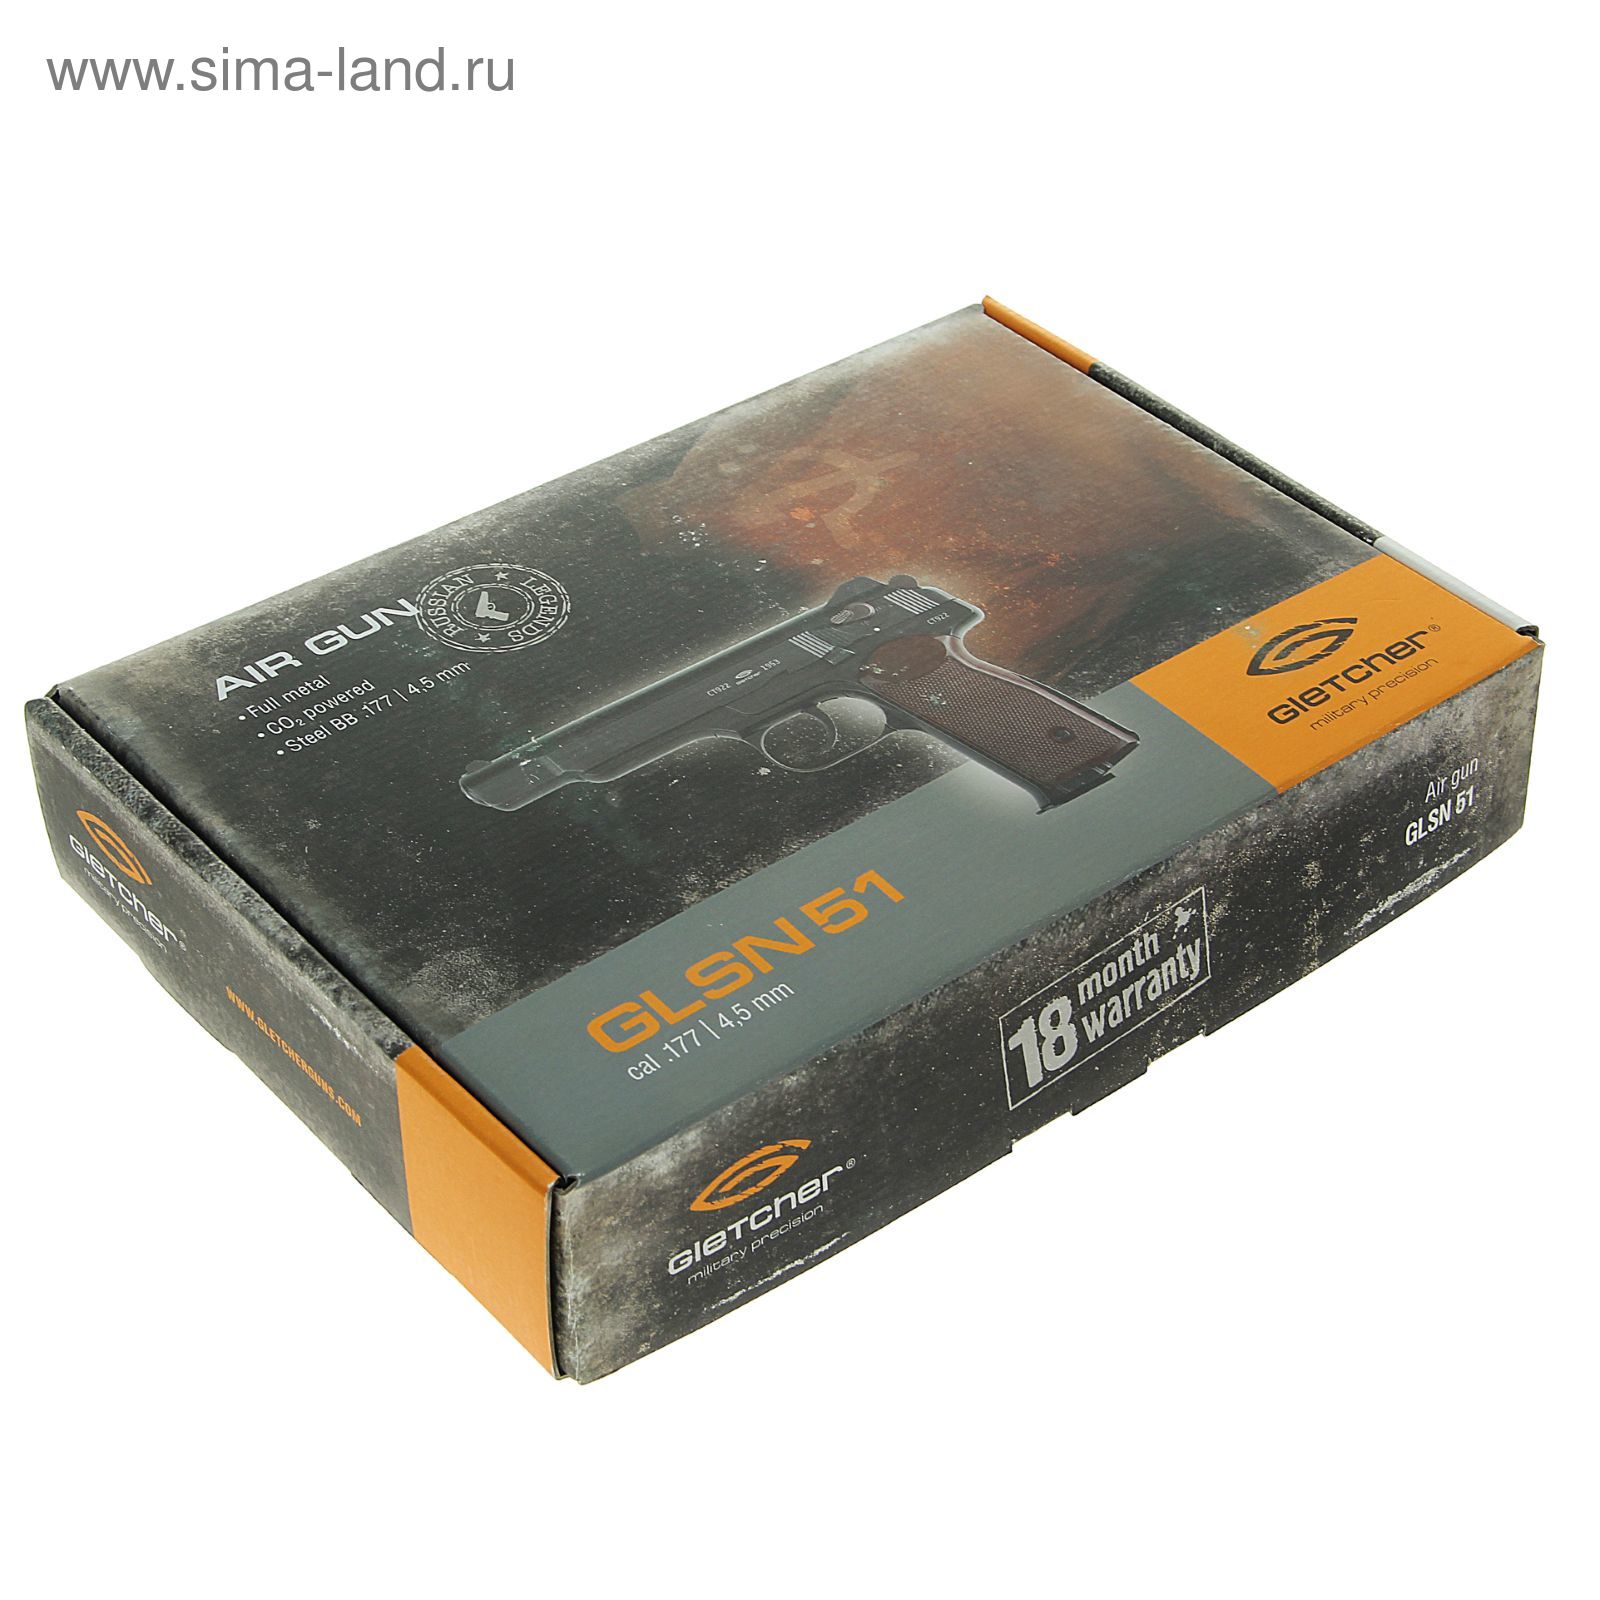 Пистолет пневматический Gletcher GLSN51, 4,5 см